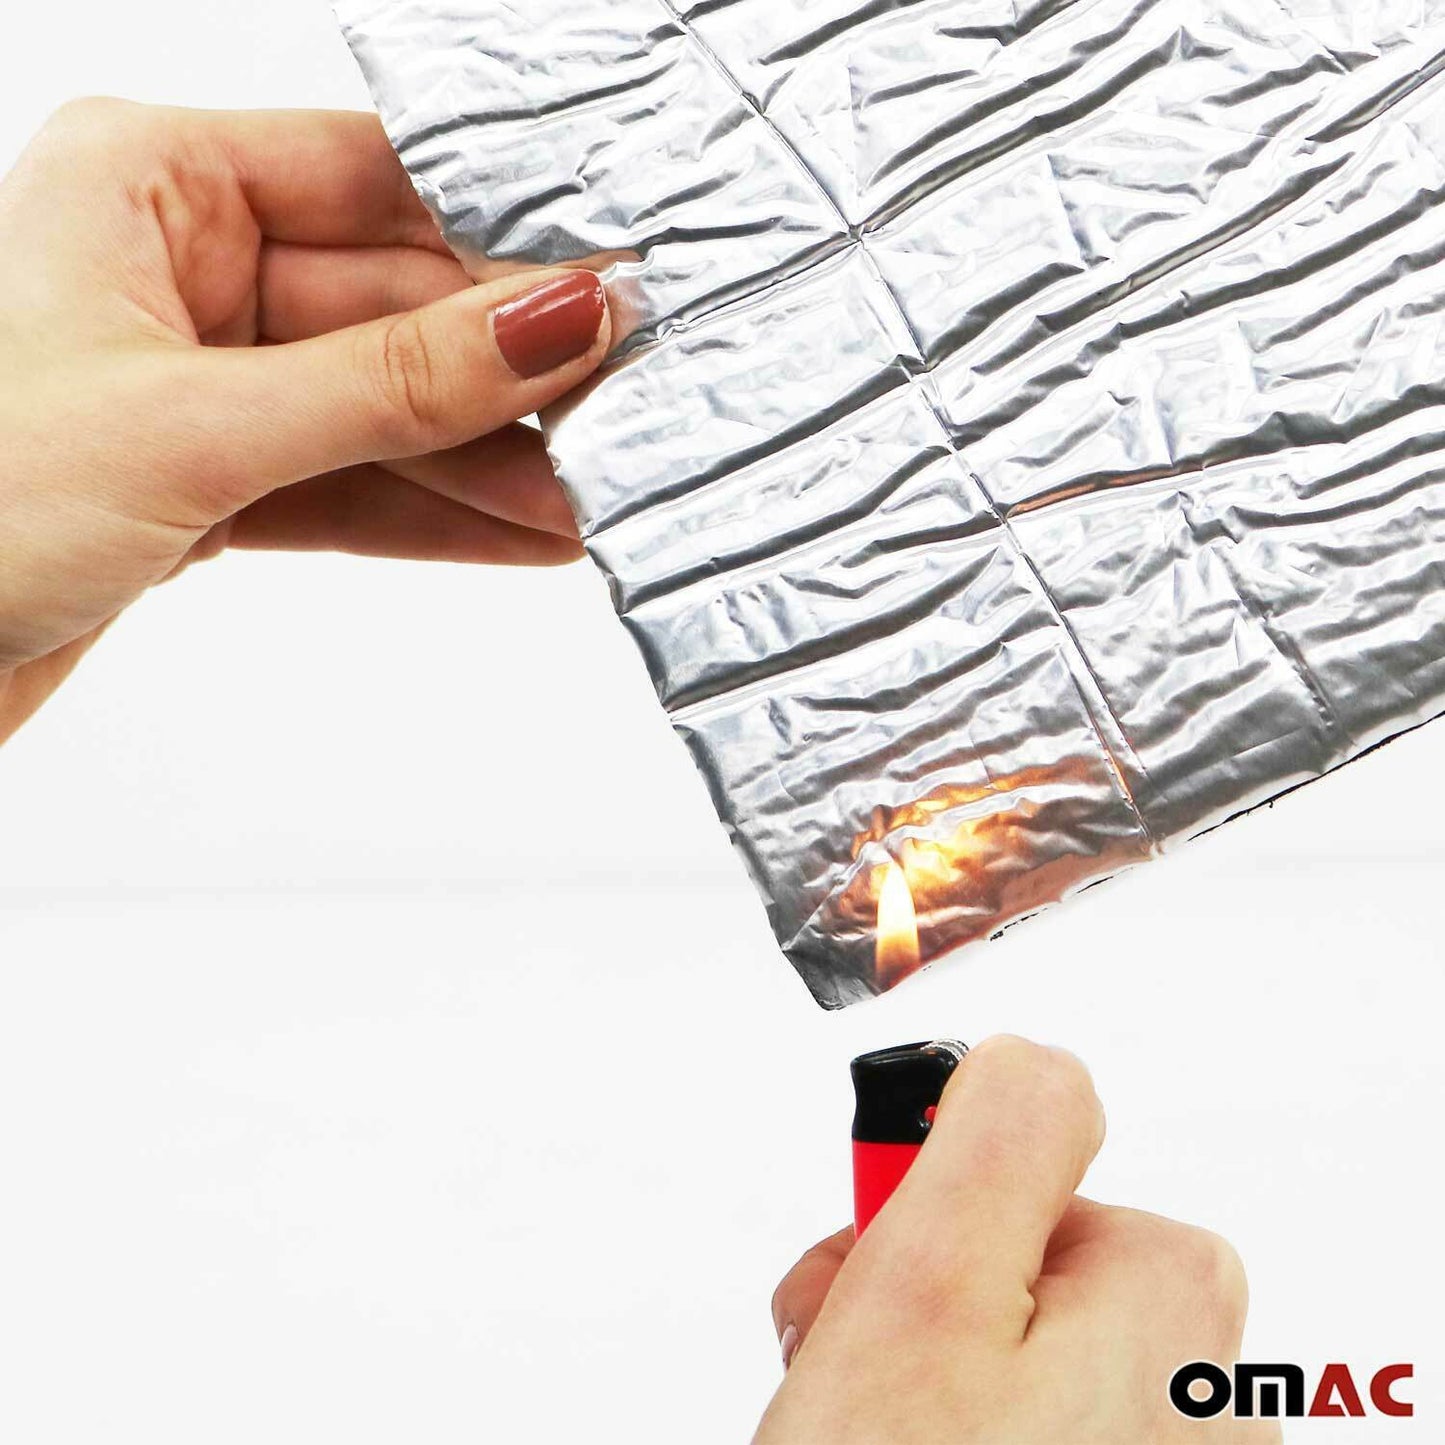 OMAC Heat Shield Thermal Sound Deadening Insulation Noise Proof 39,4"x39,4"*0,23 U022132